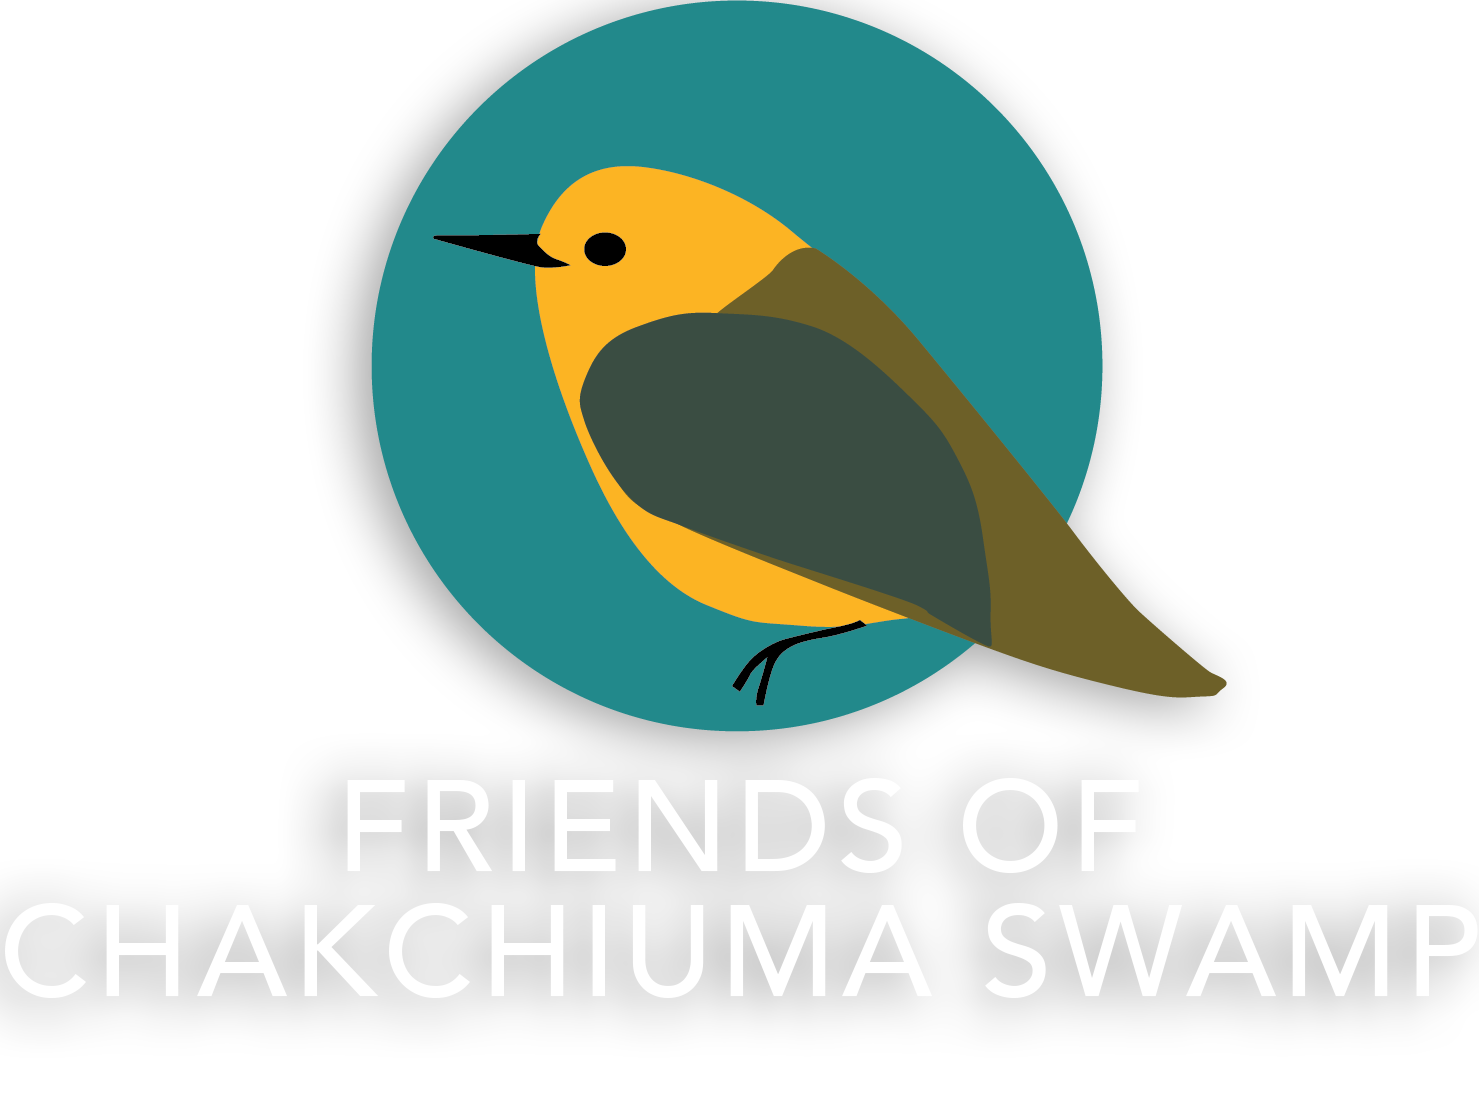 Friends of Chakchiuma Swamp